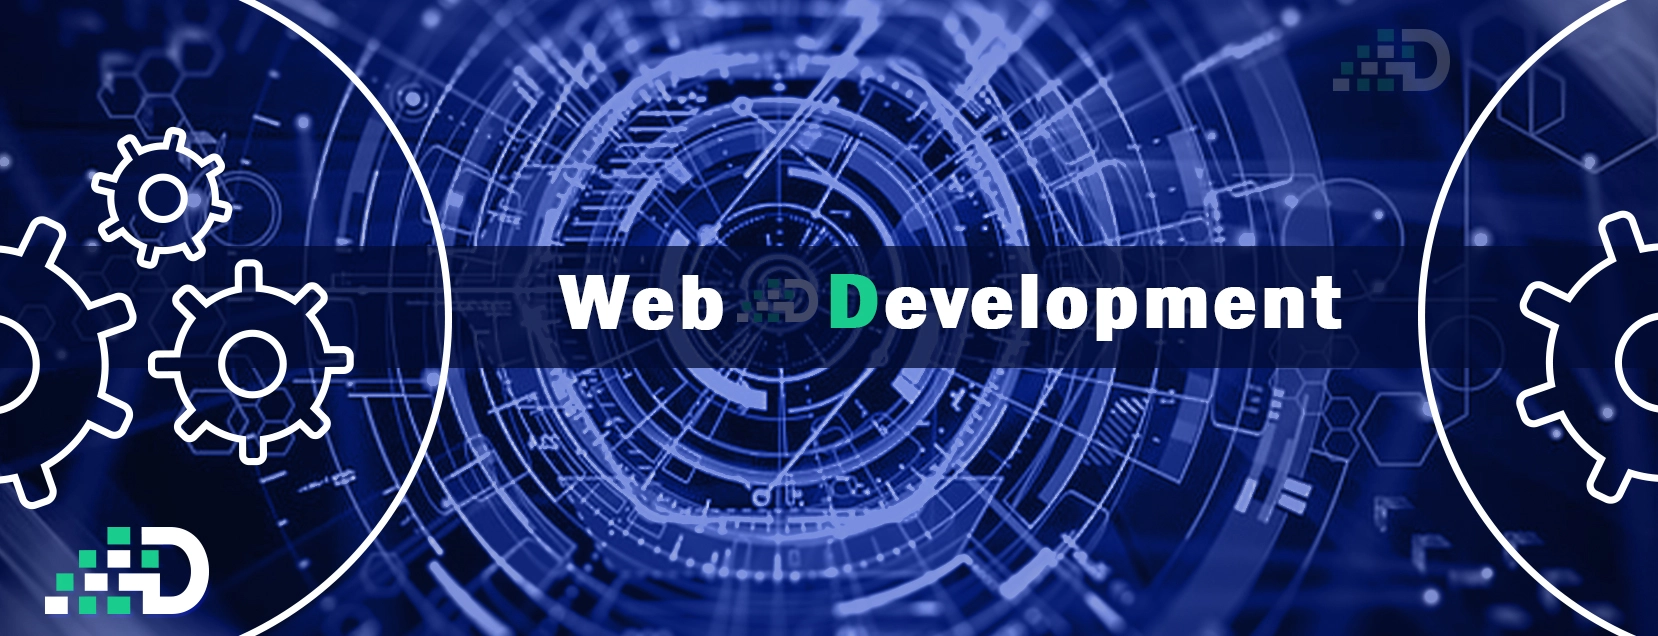 webdevelopment-banner-image